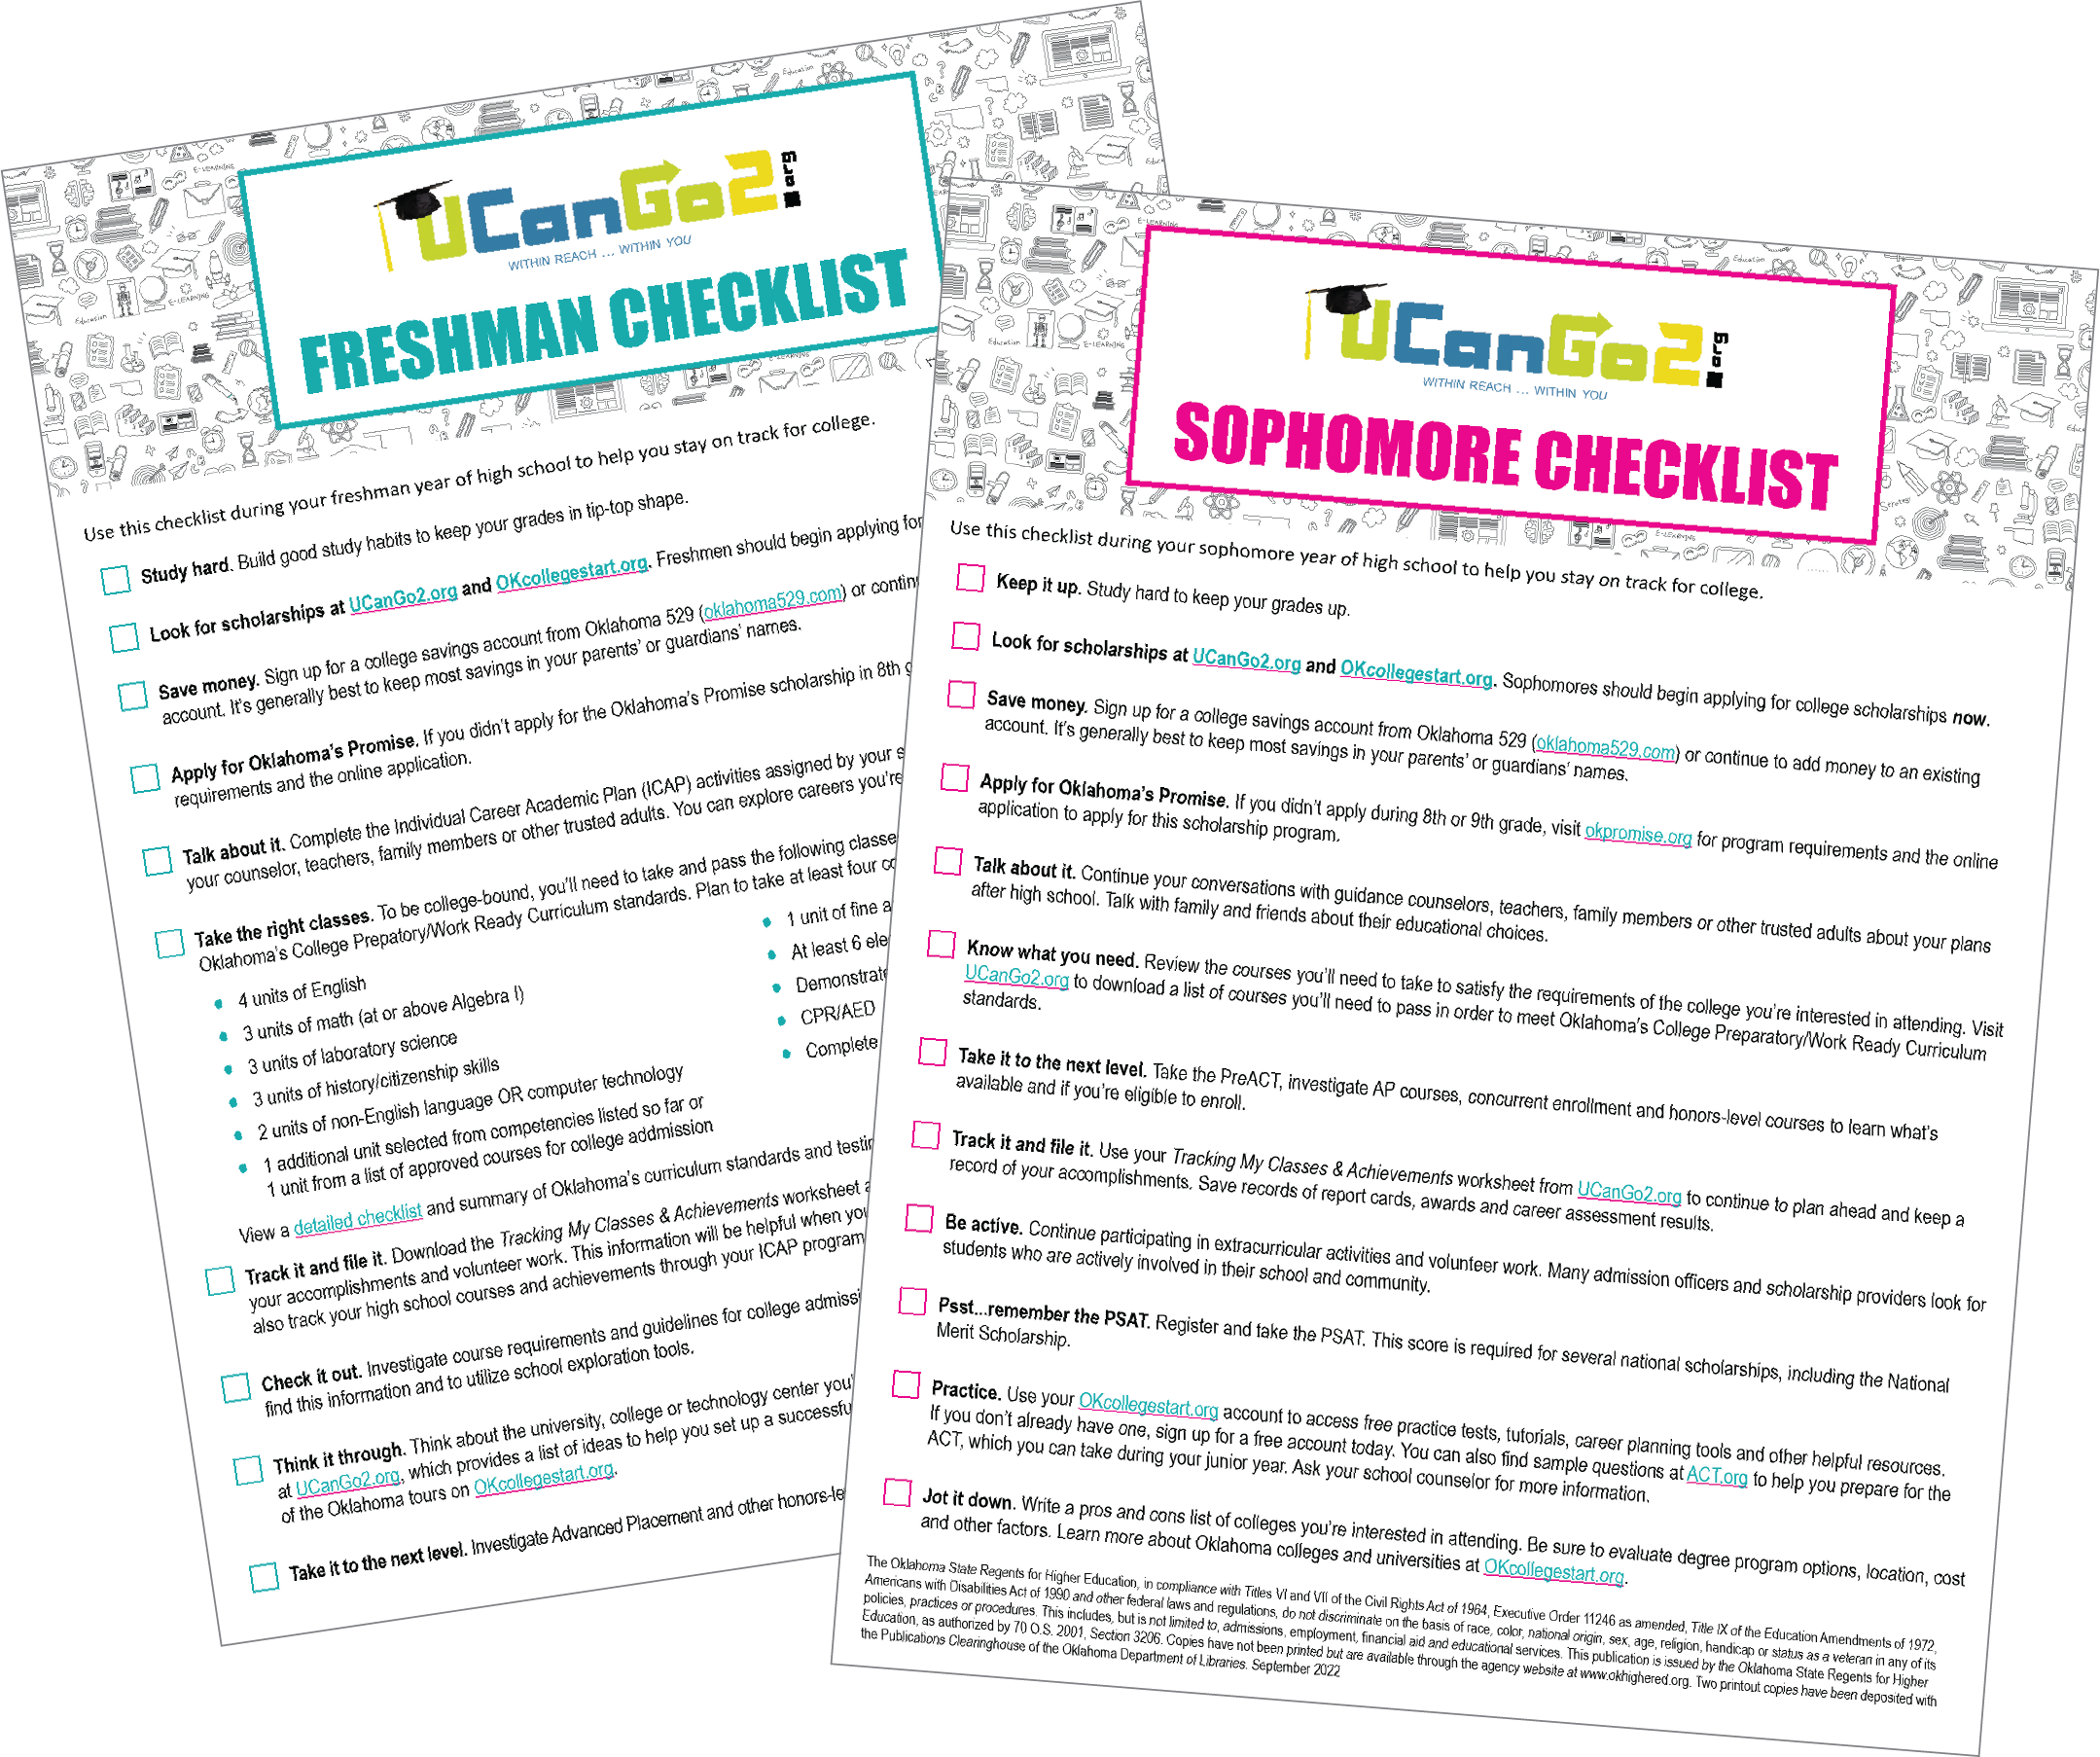 PDF of Junior Checklist